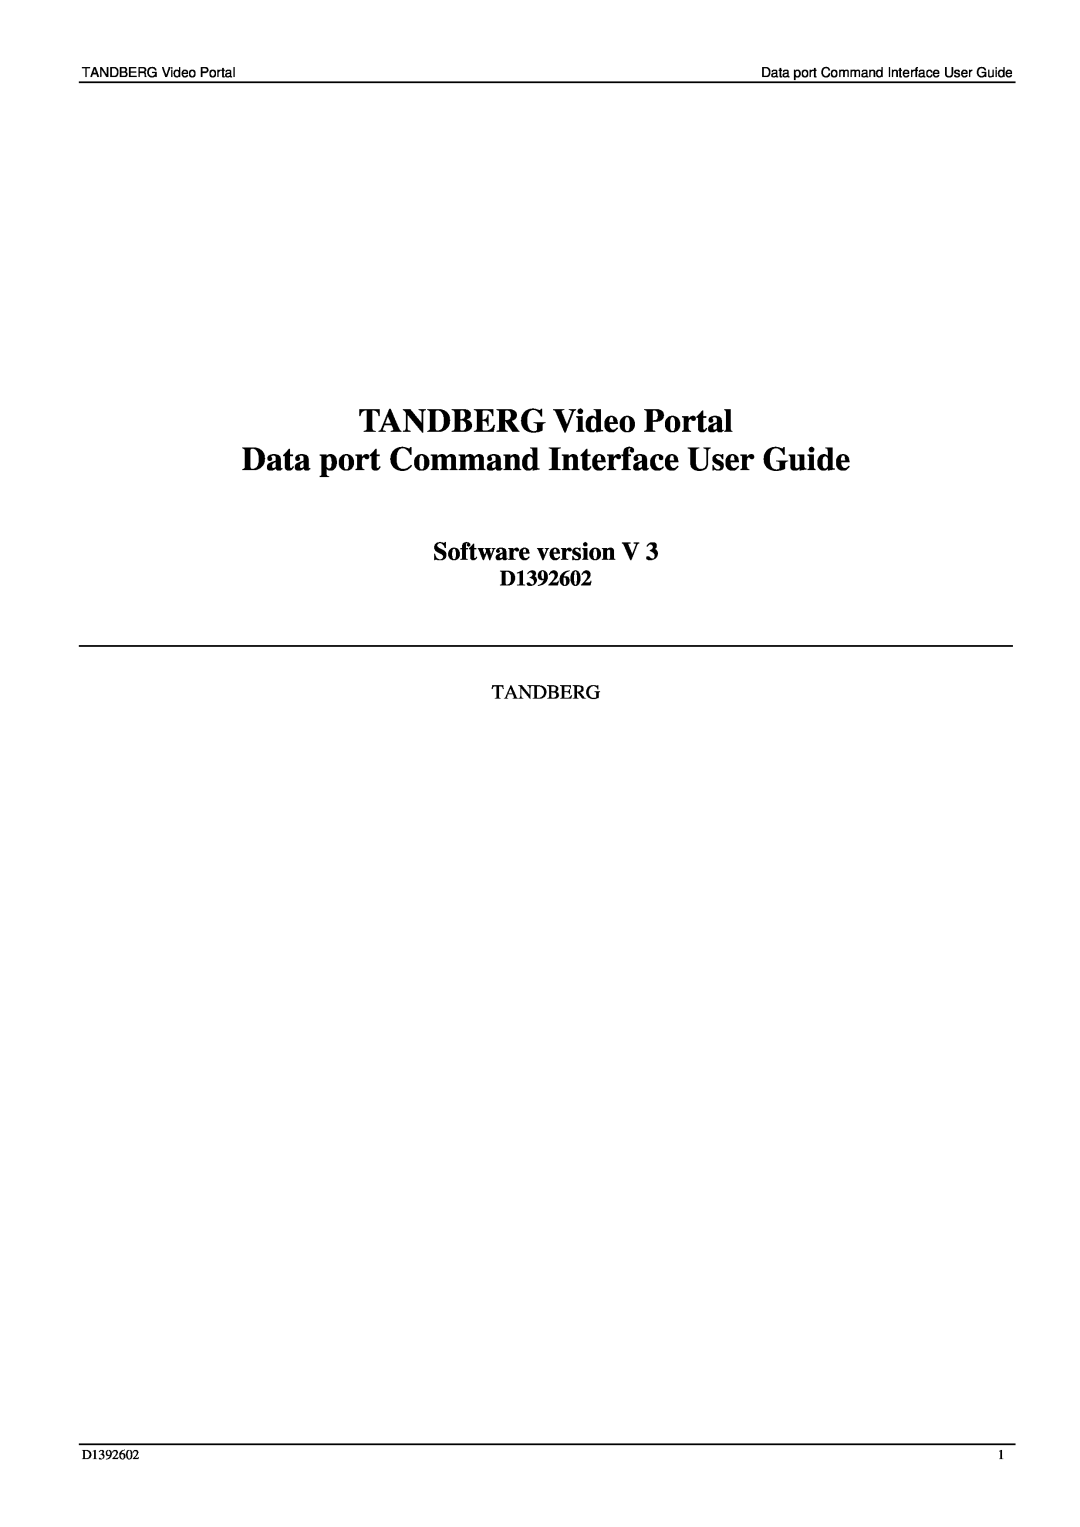 TANDBERG D1392602 manual Software version V, TANDBERG Video Portal Data port Command Interface User Guide 